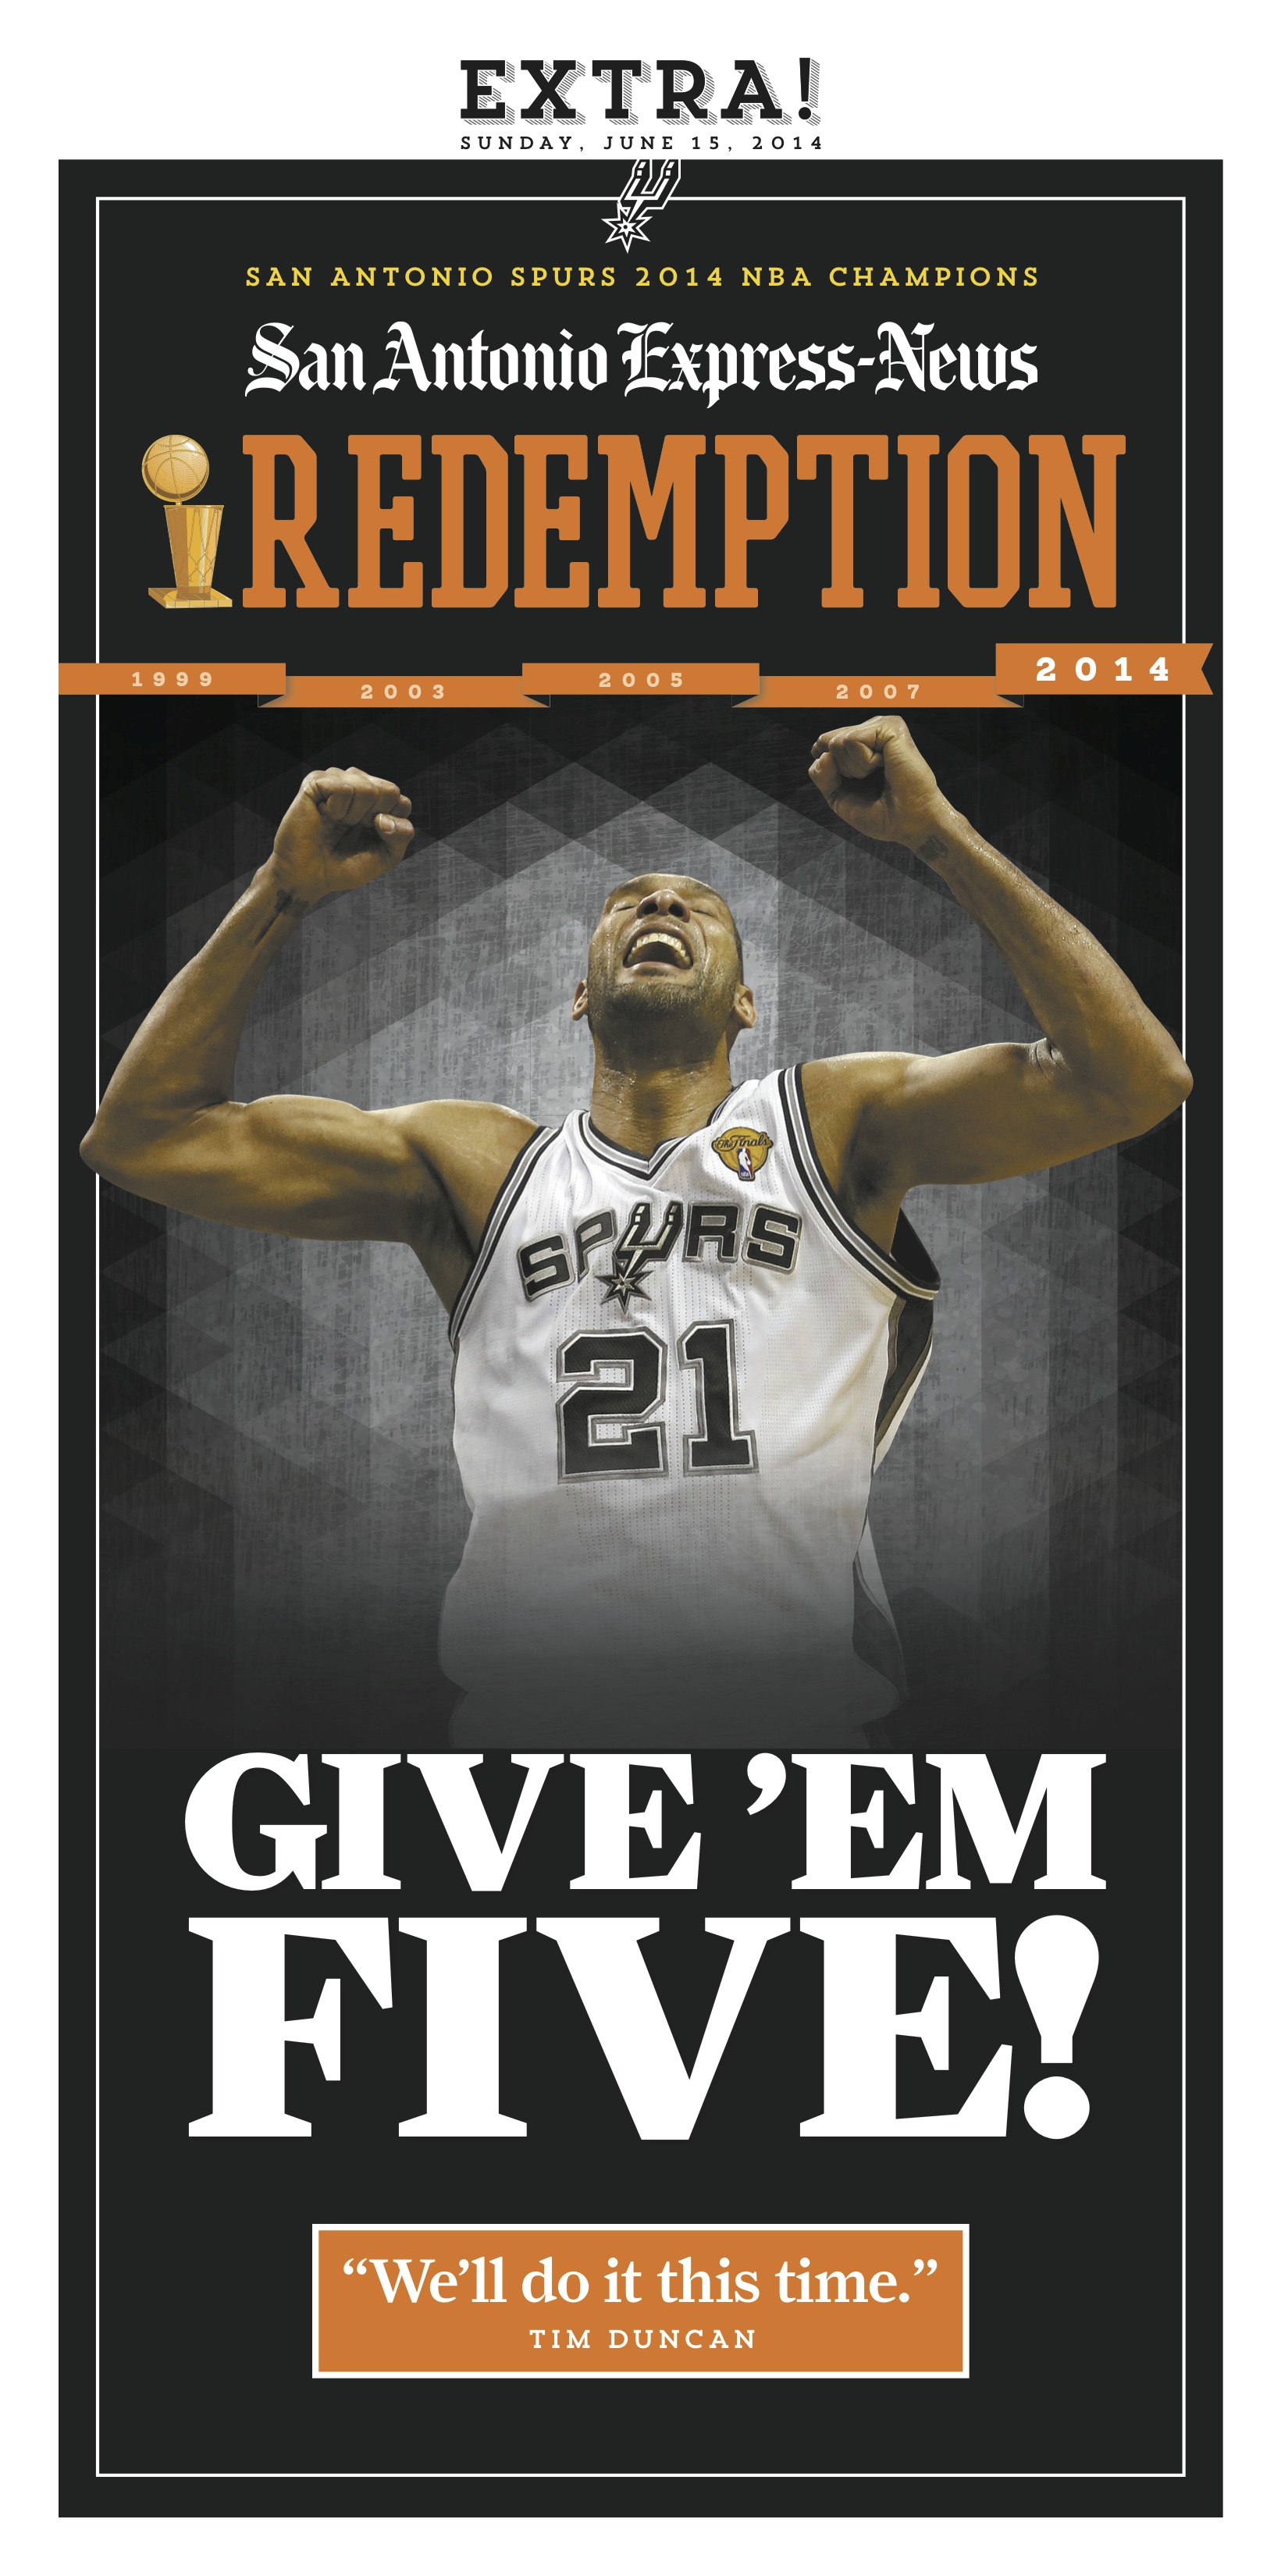 San Antonio Spurs win 5th NBA crown - CBS News